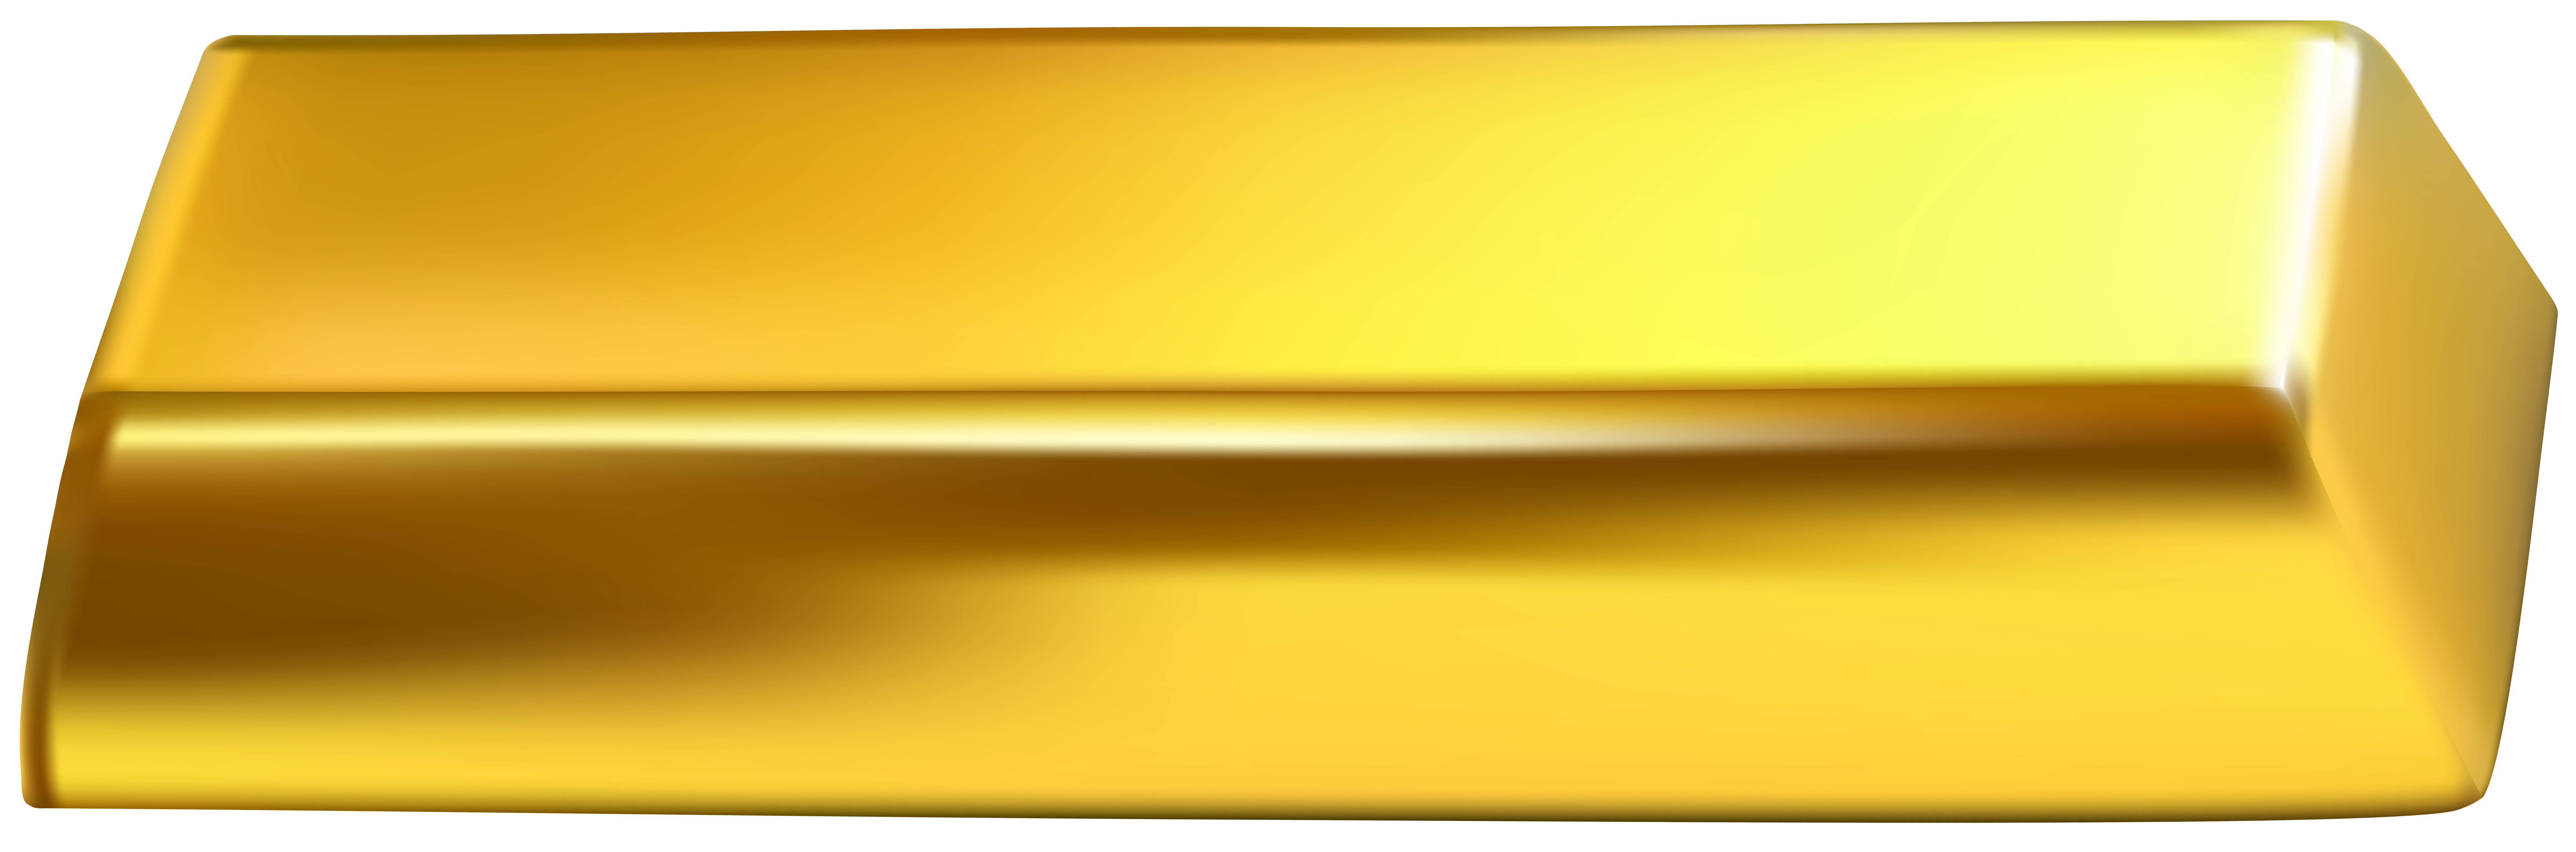 Gold Bar Png Transparent Background Gold Bar Vector Clipart | Hot Sex ...